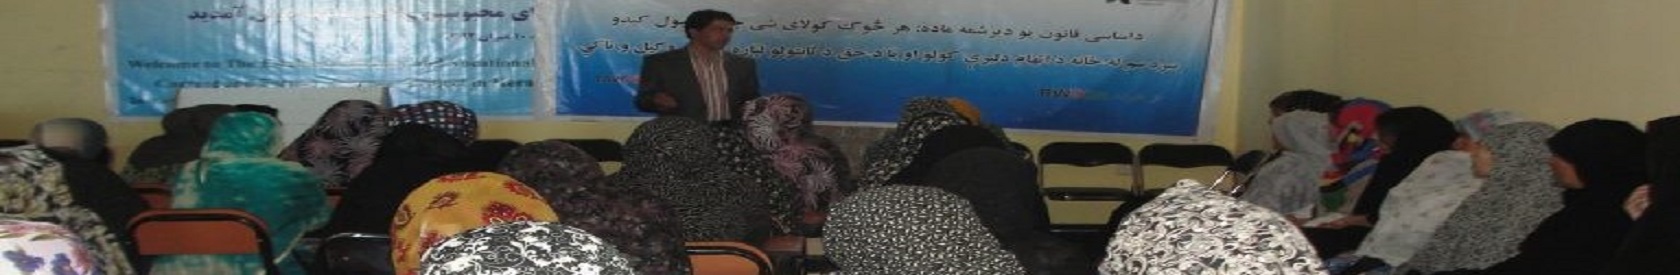 Awareness training program in Herat’s female jail